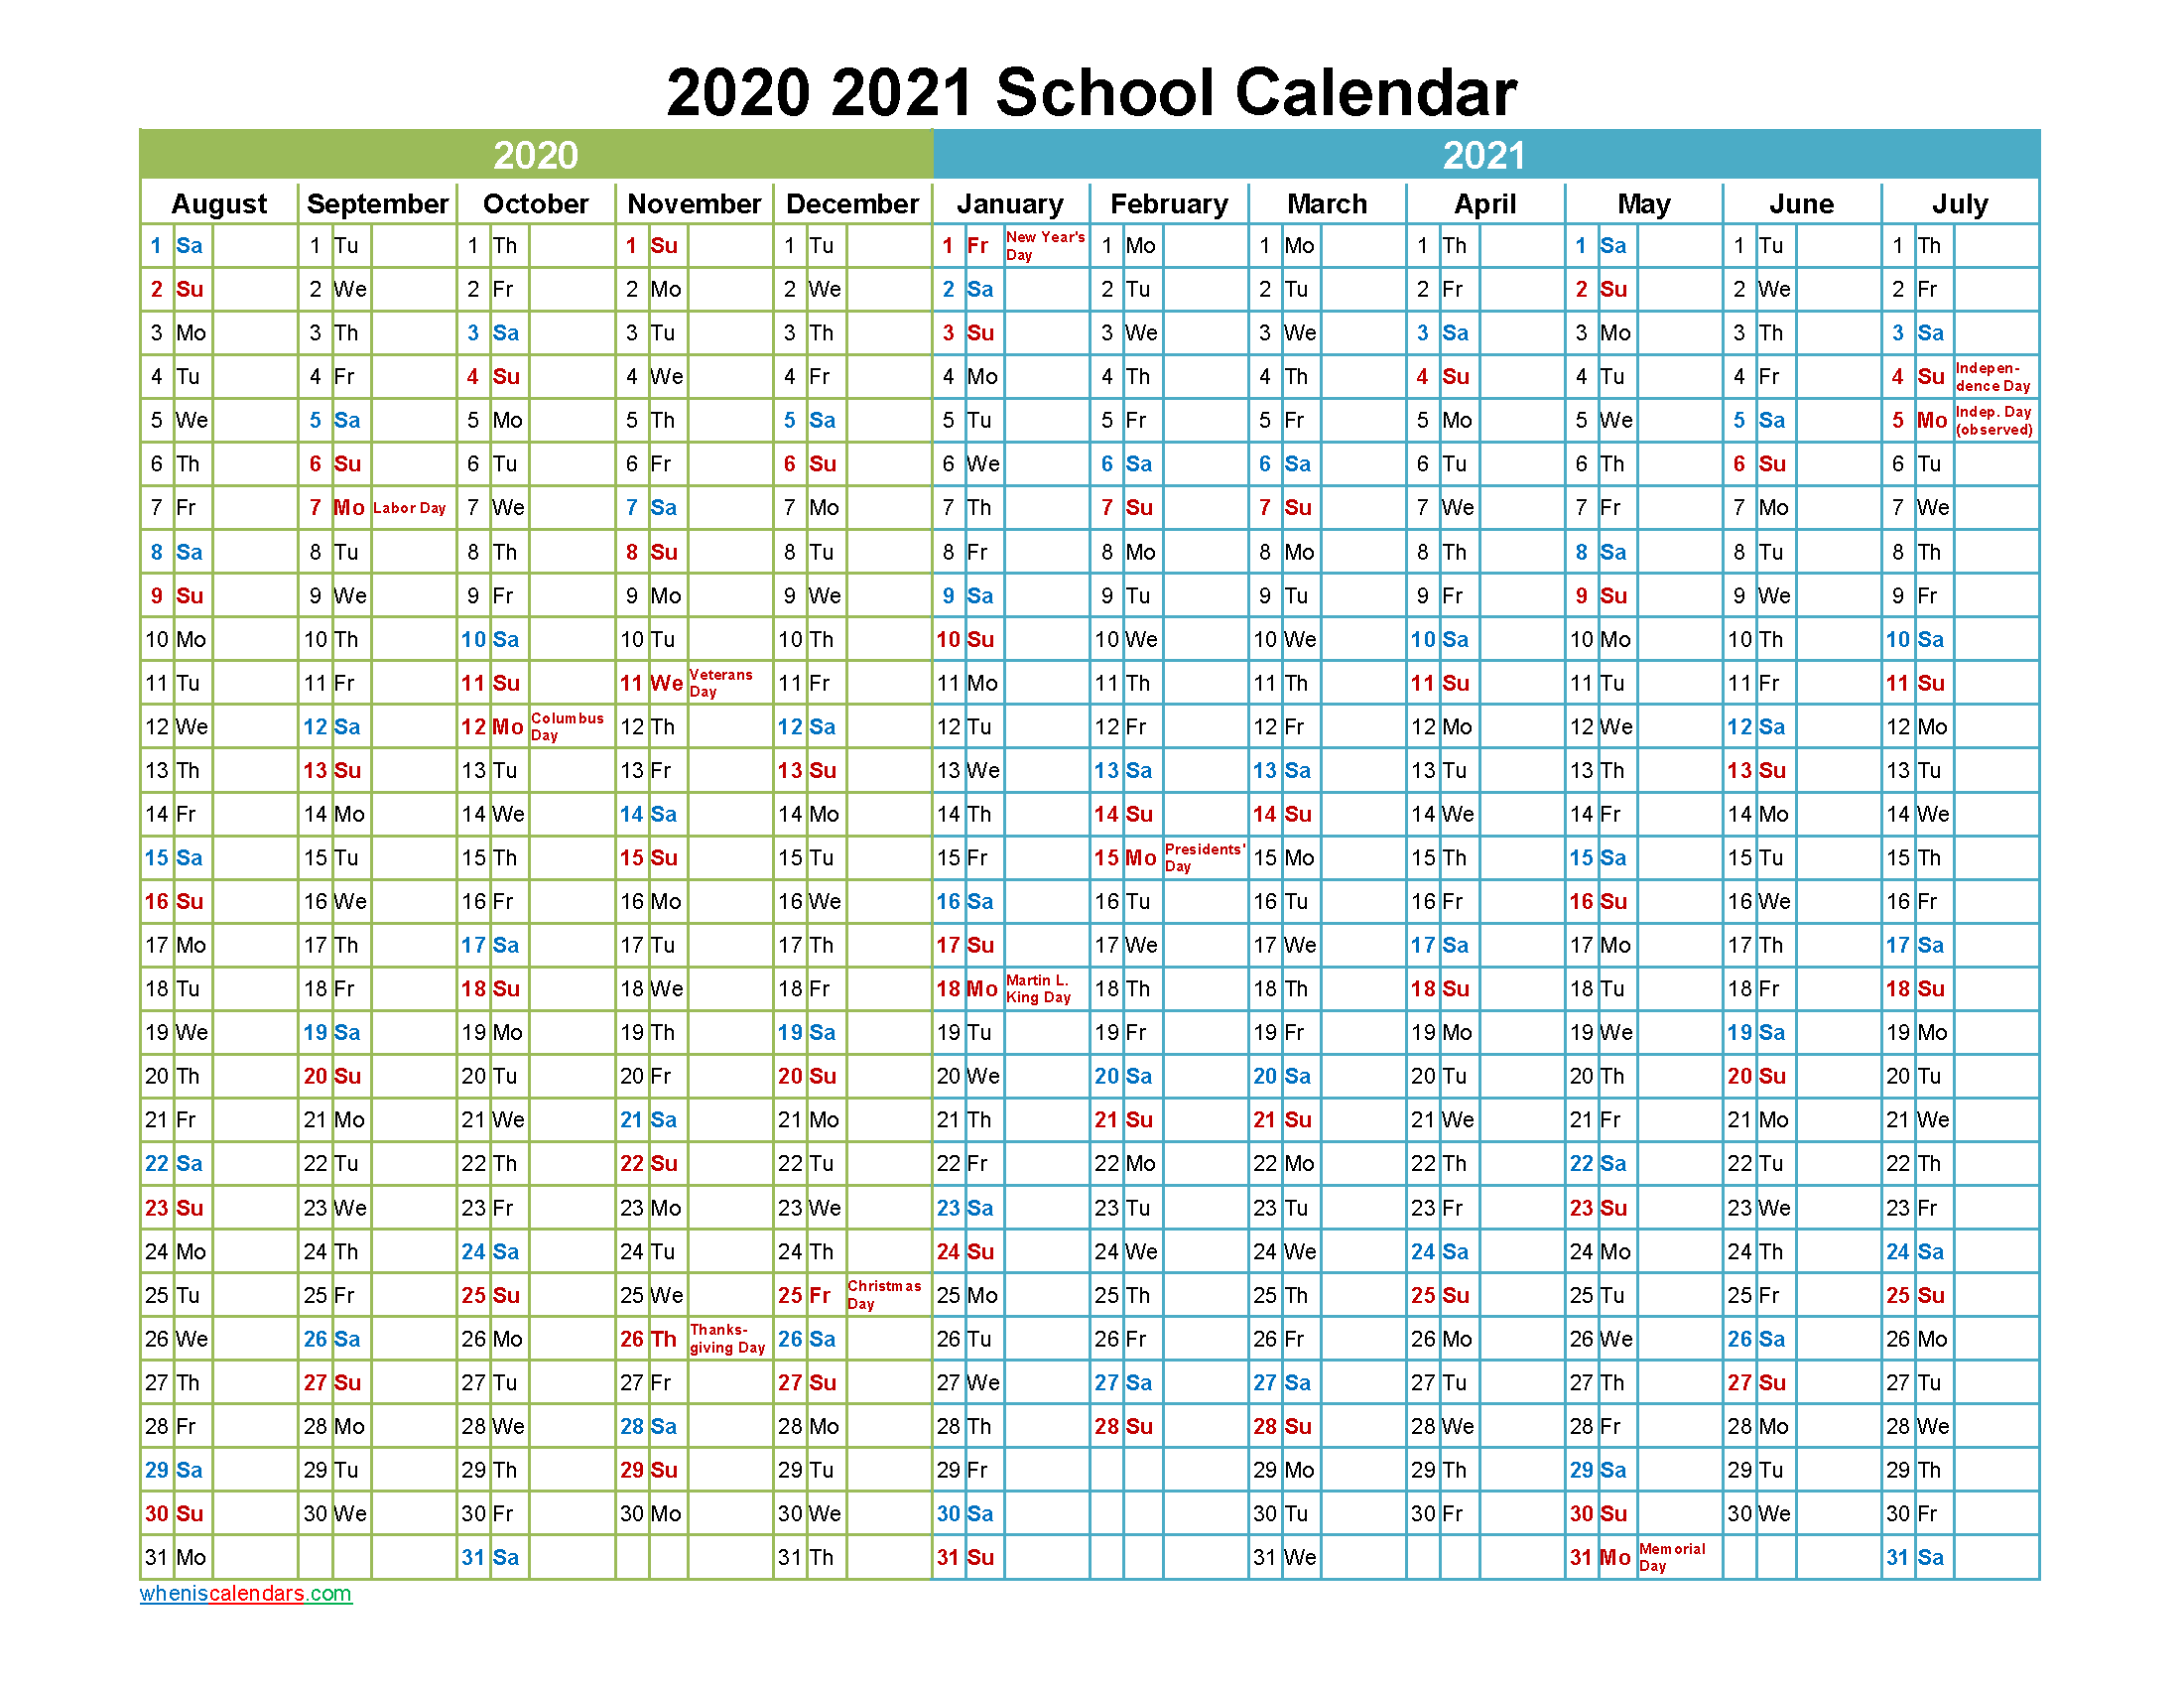 2020 and 2021 School Calendar Printable - Template No.21scl14